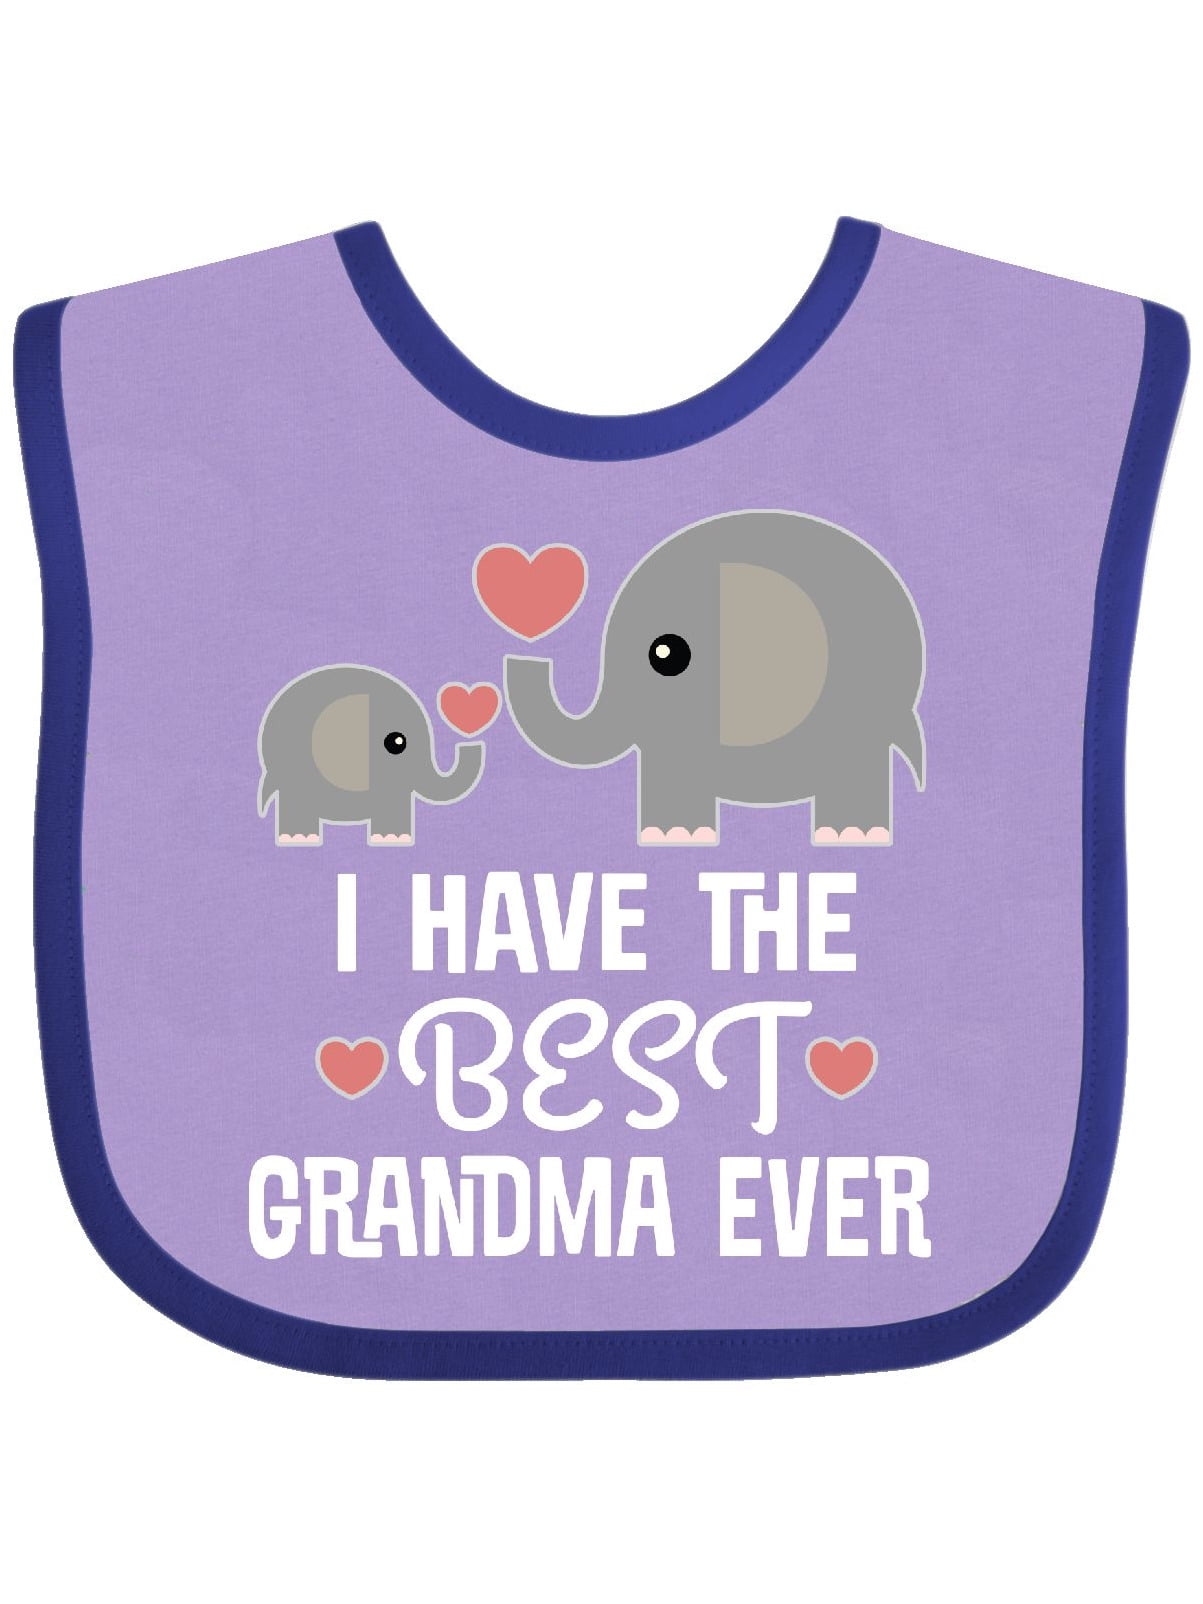 Grandchild I Have The Best Grandma Ever Baby Bib - Walmart.com ...